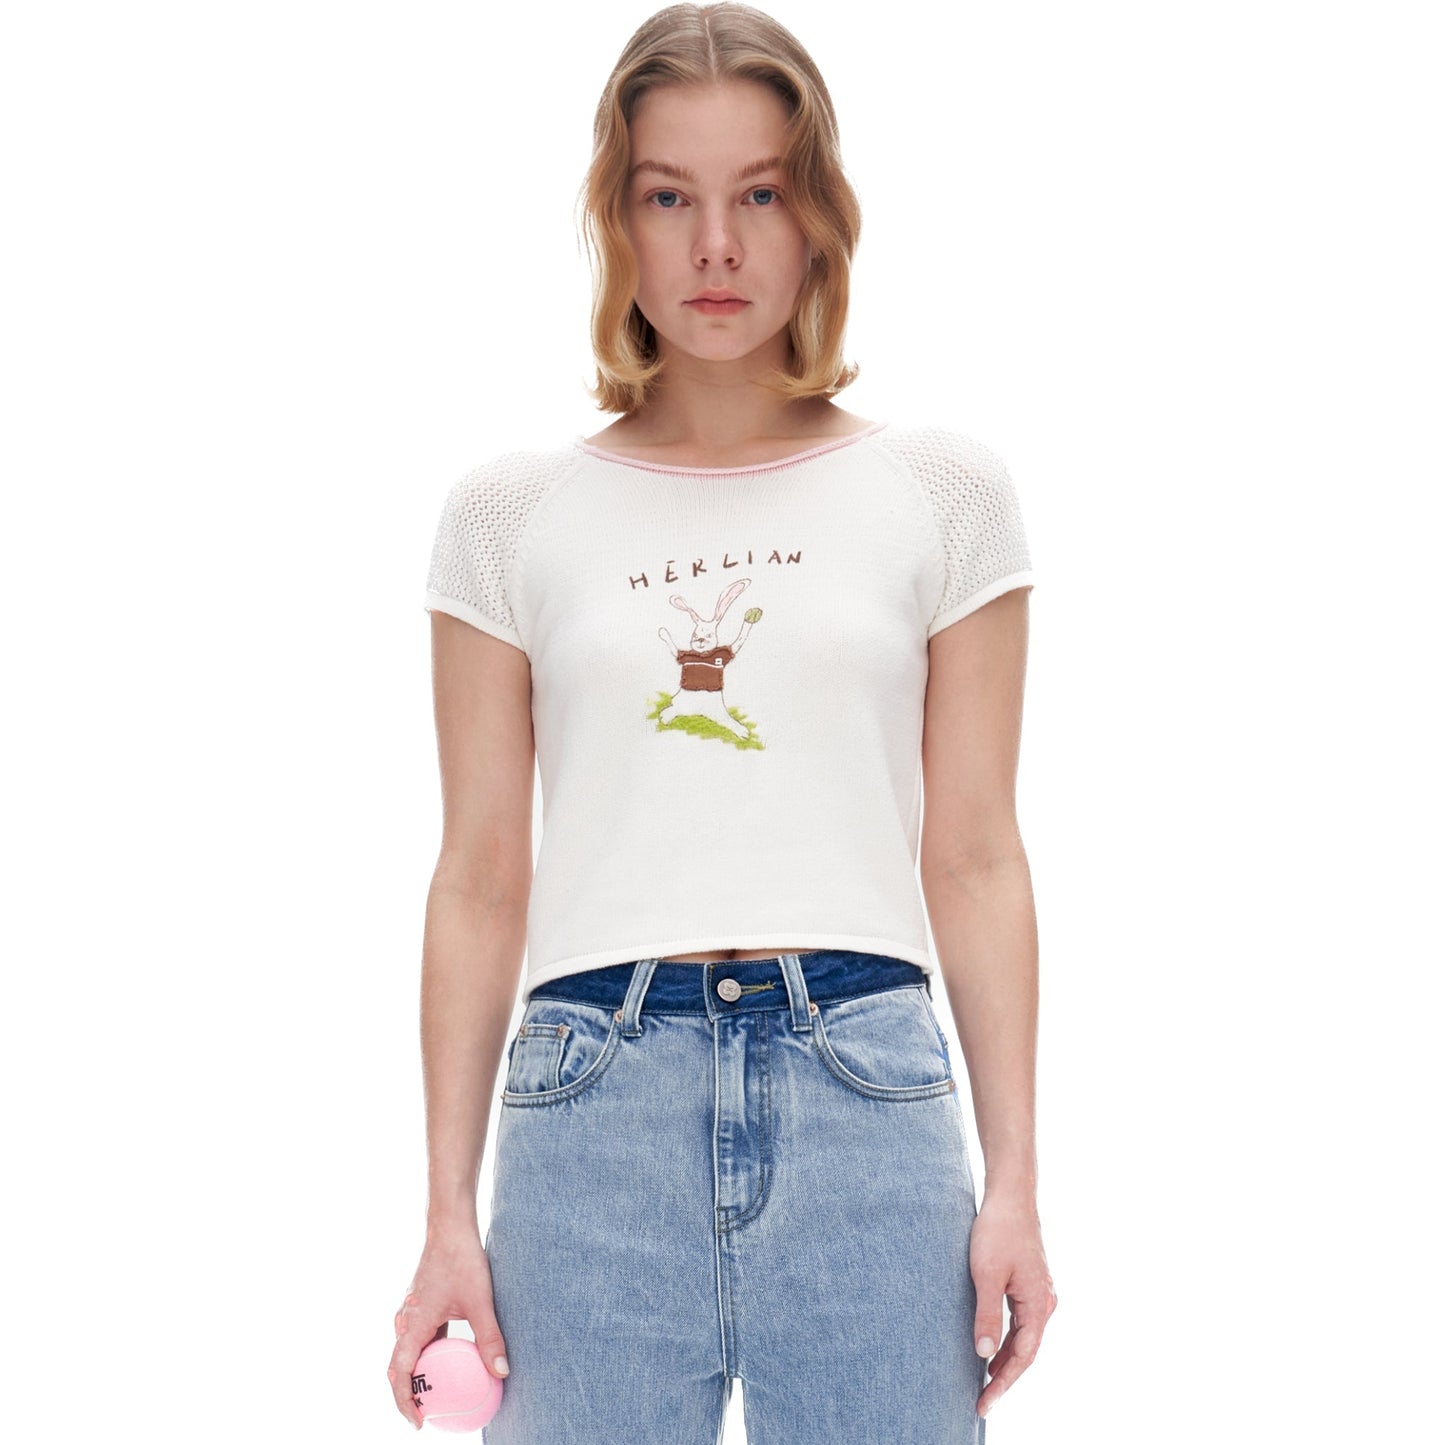 Herlian Rabbit Print Knit T-shirt